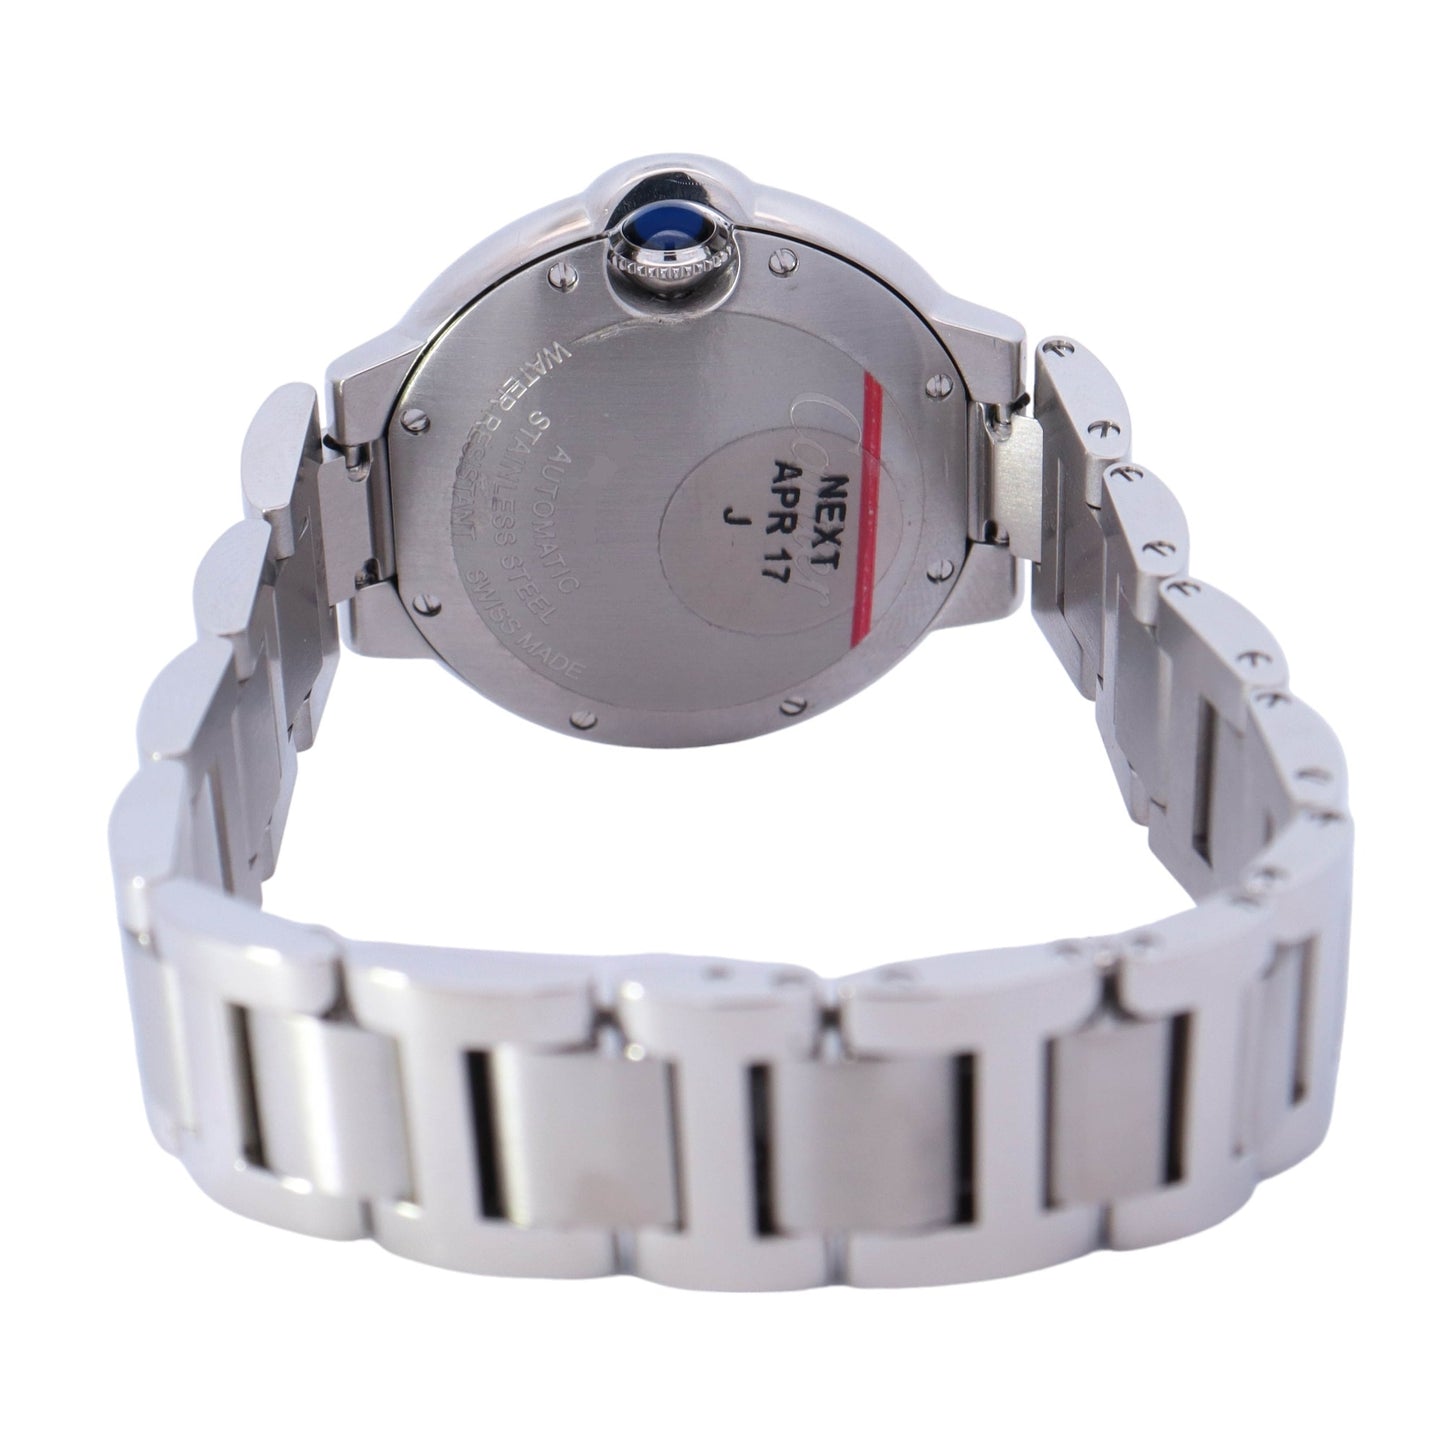 Cartier Ballon Bleu Stainless Steel 33mm White Roman Dial Watch Reference # W6920071 - Happy Jewelers Fine Jewelry Lifetime Warranty